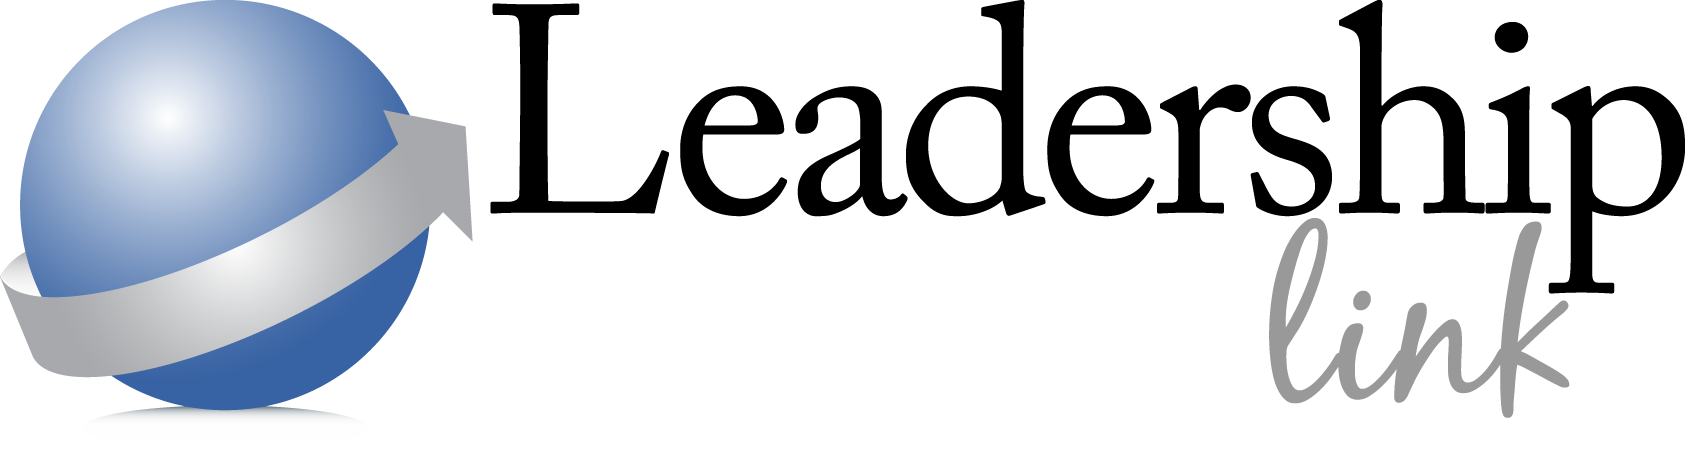 leadership link logo